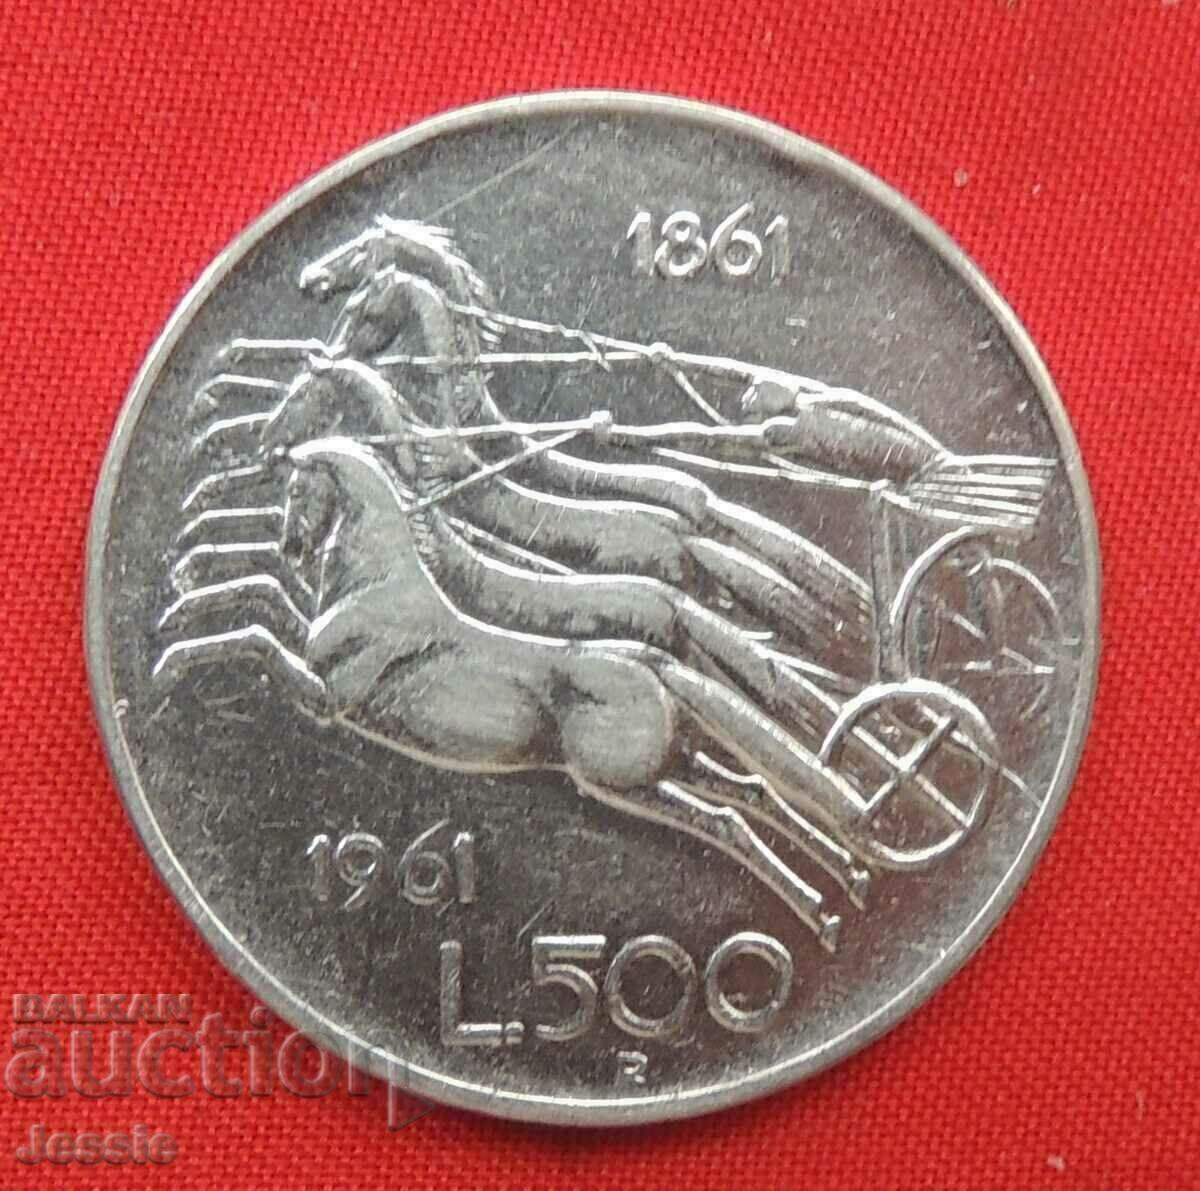 500 лири Италия - Quadriga triste 1961 Сребро КАЧЕСТВО